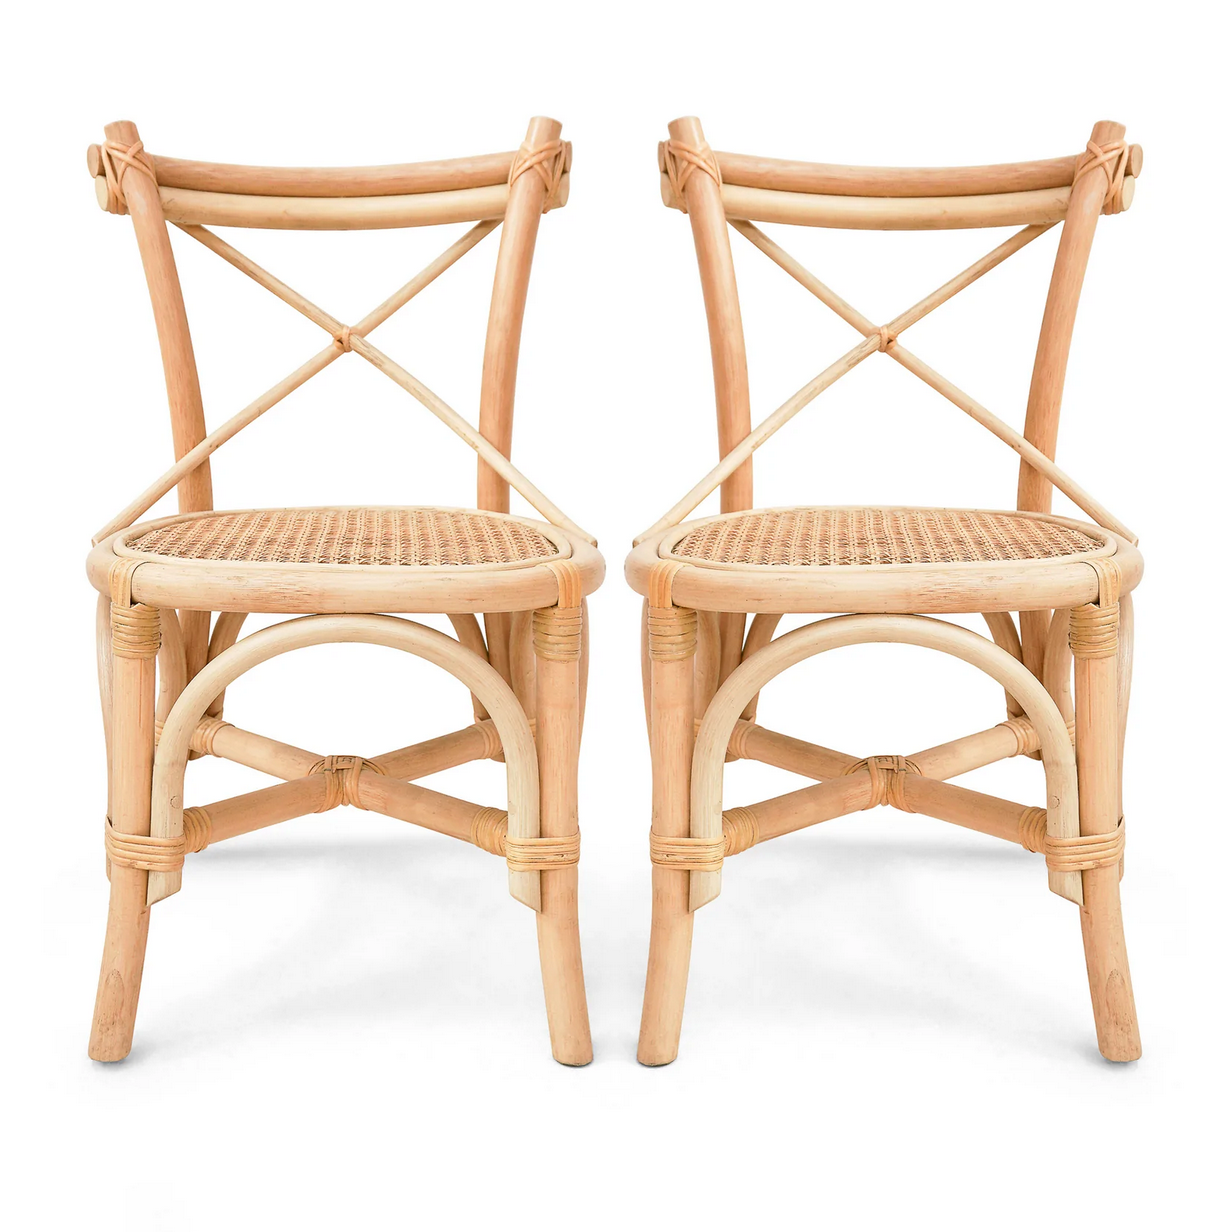 Poppie Farm Chairs - Set of 2